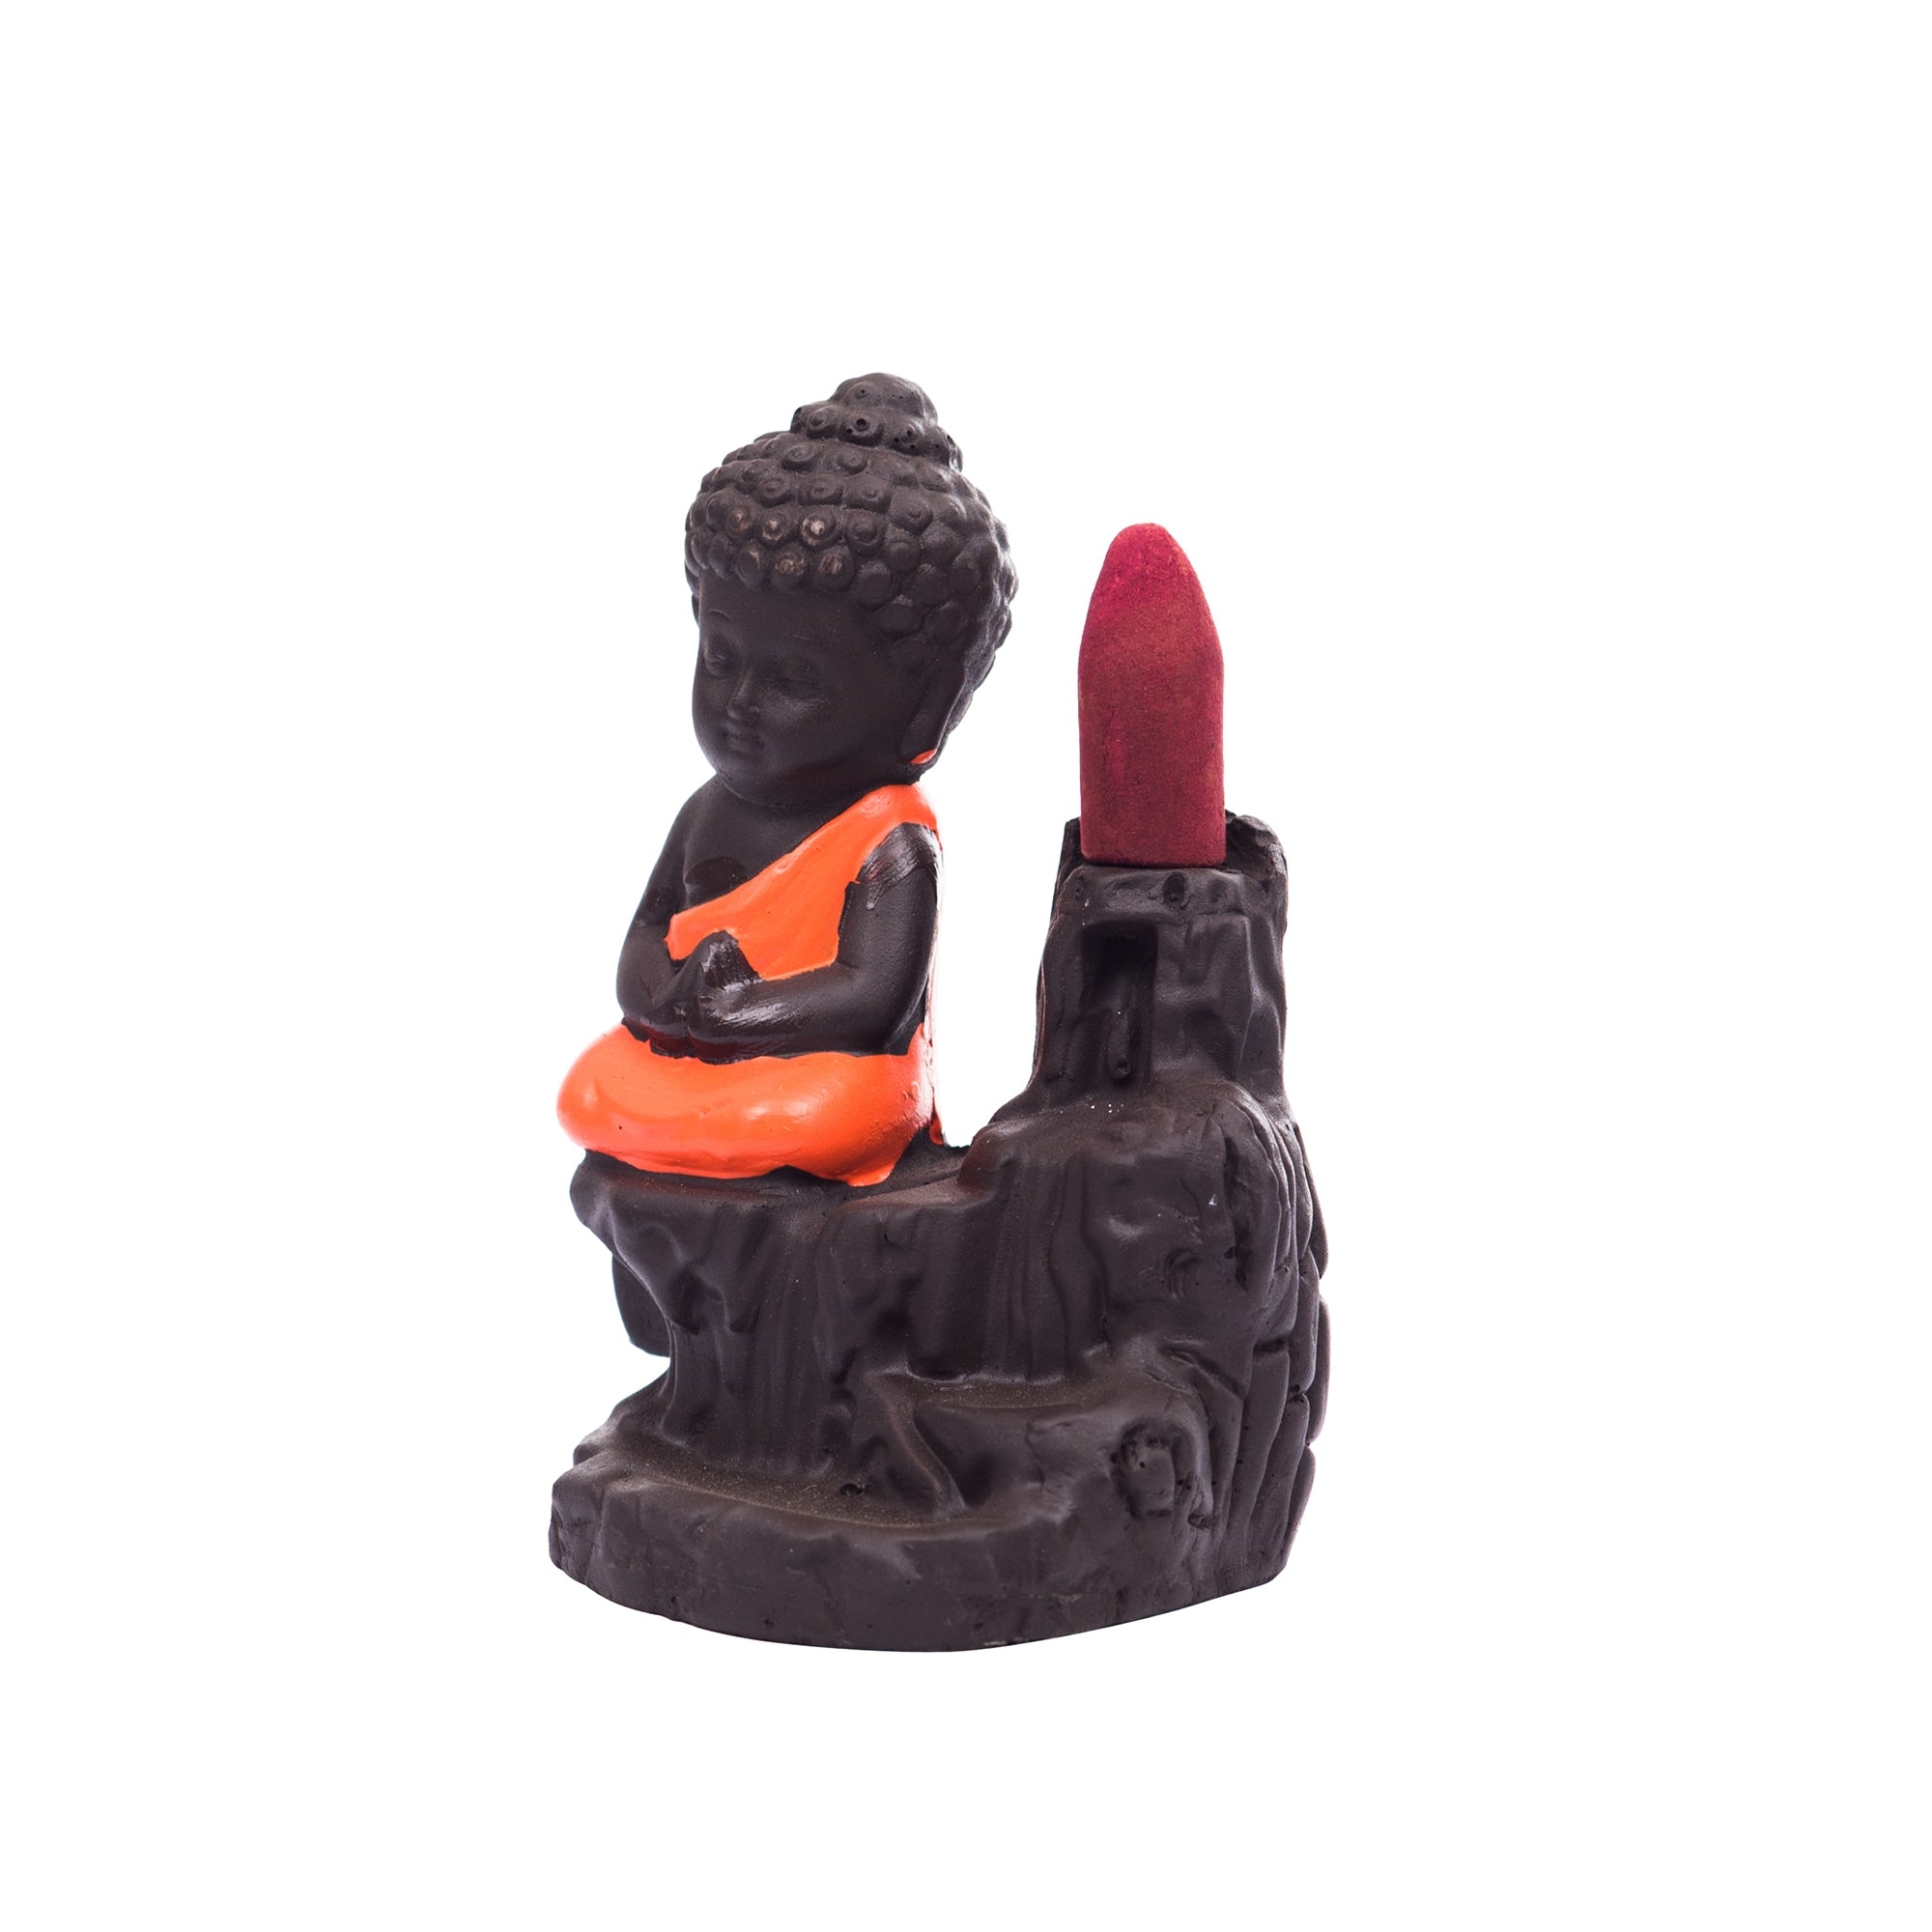 Meditating Monk Buddha Statue Smoke Backflow Cone Incense Holder Decorative Showpiece with 10 free Smoke Backflow Scented Cone Incenses(Orange and Brown) 4